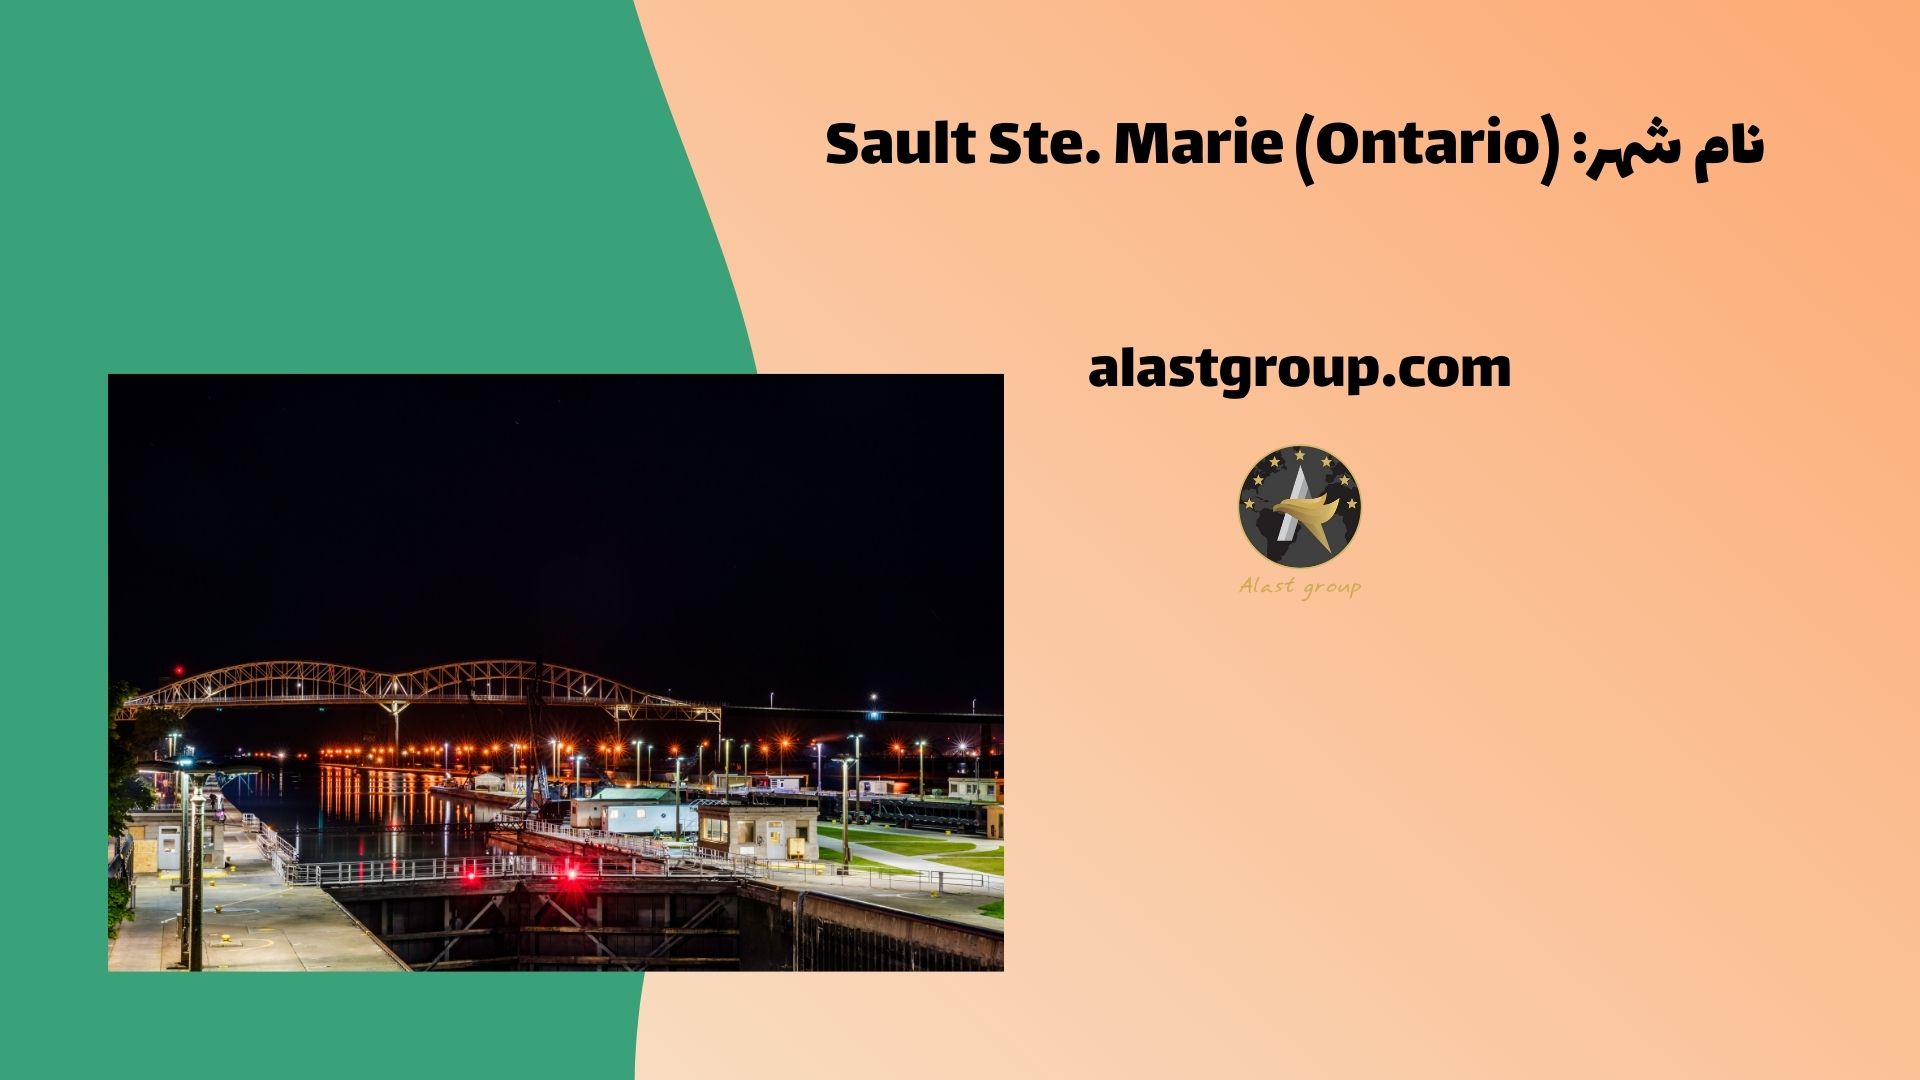 نام شهر: Sault Ste. Marie (Ontario)